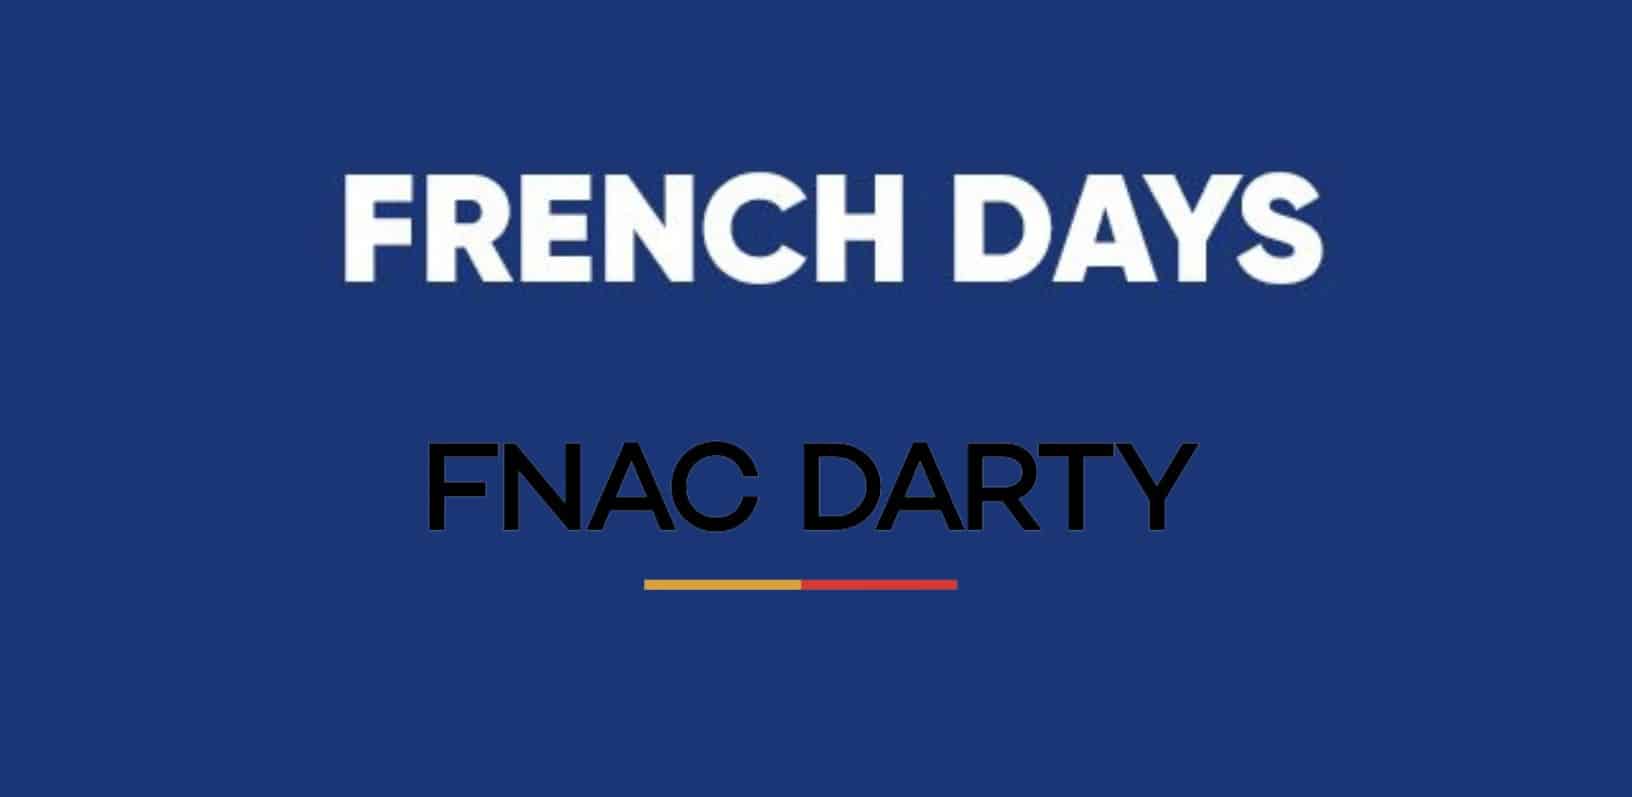 French Days Fnac Darty